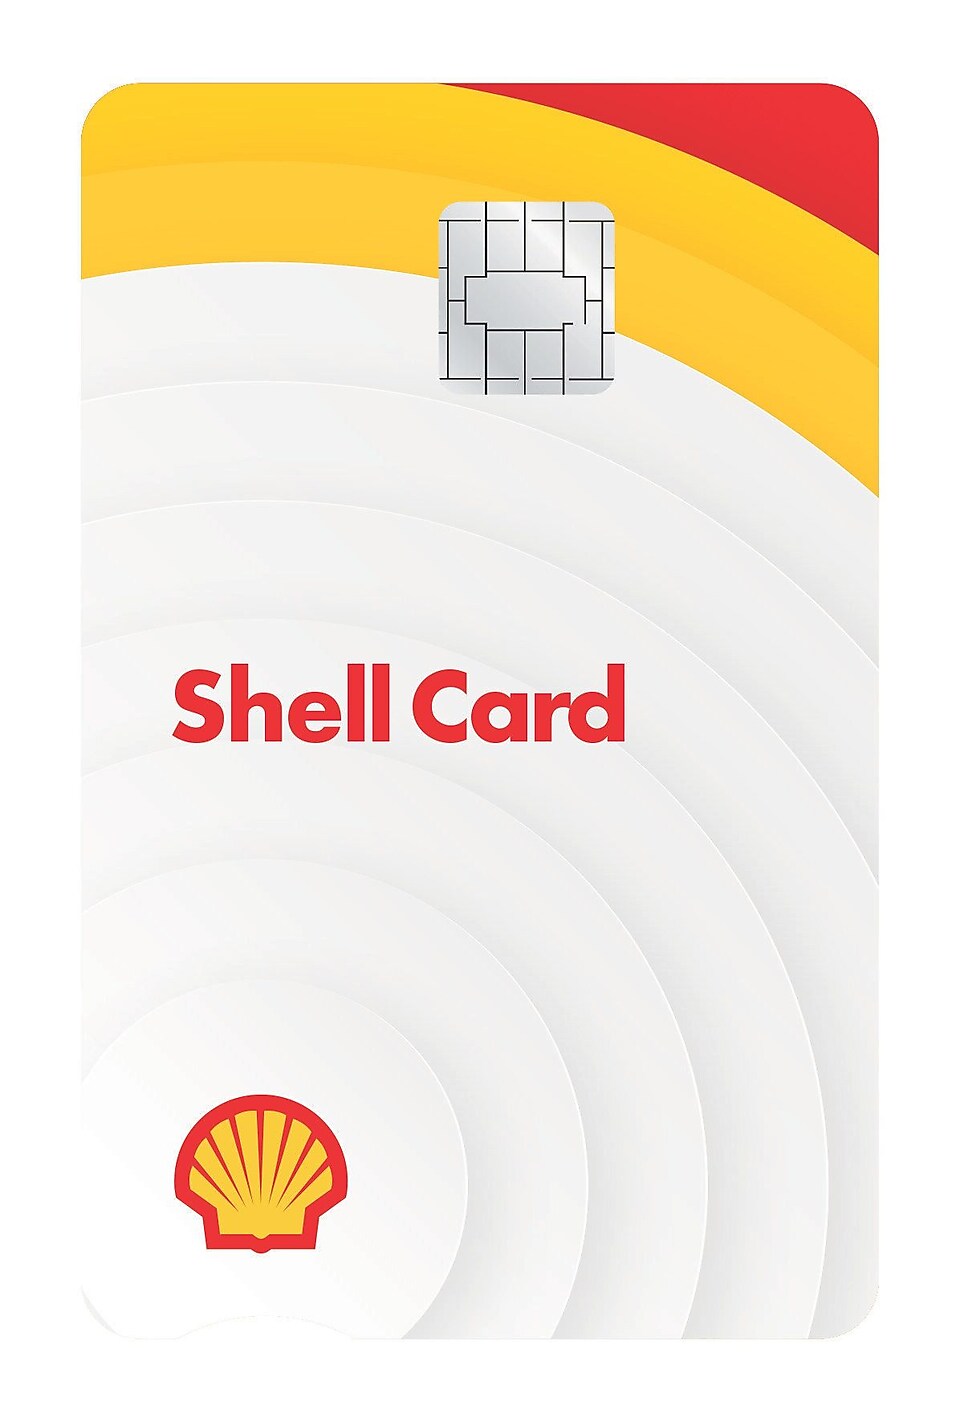 Shell fleet card image